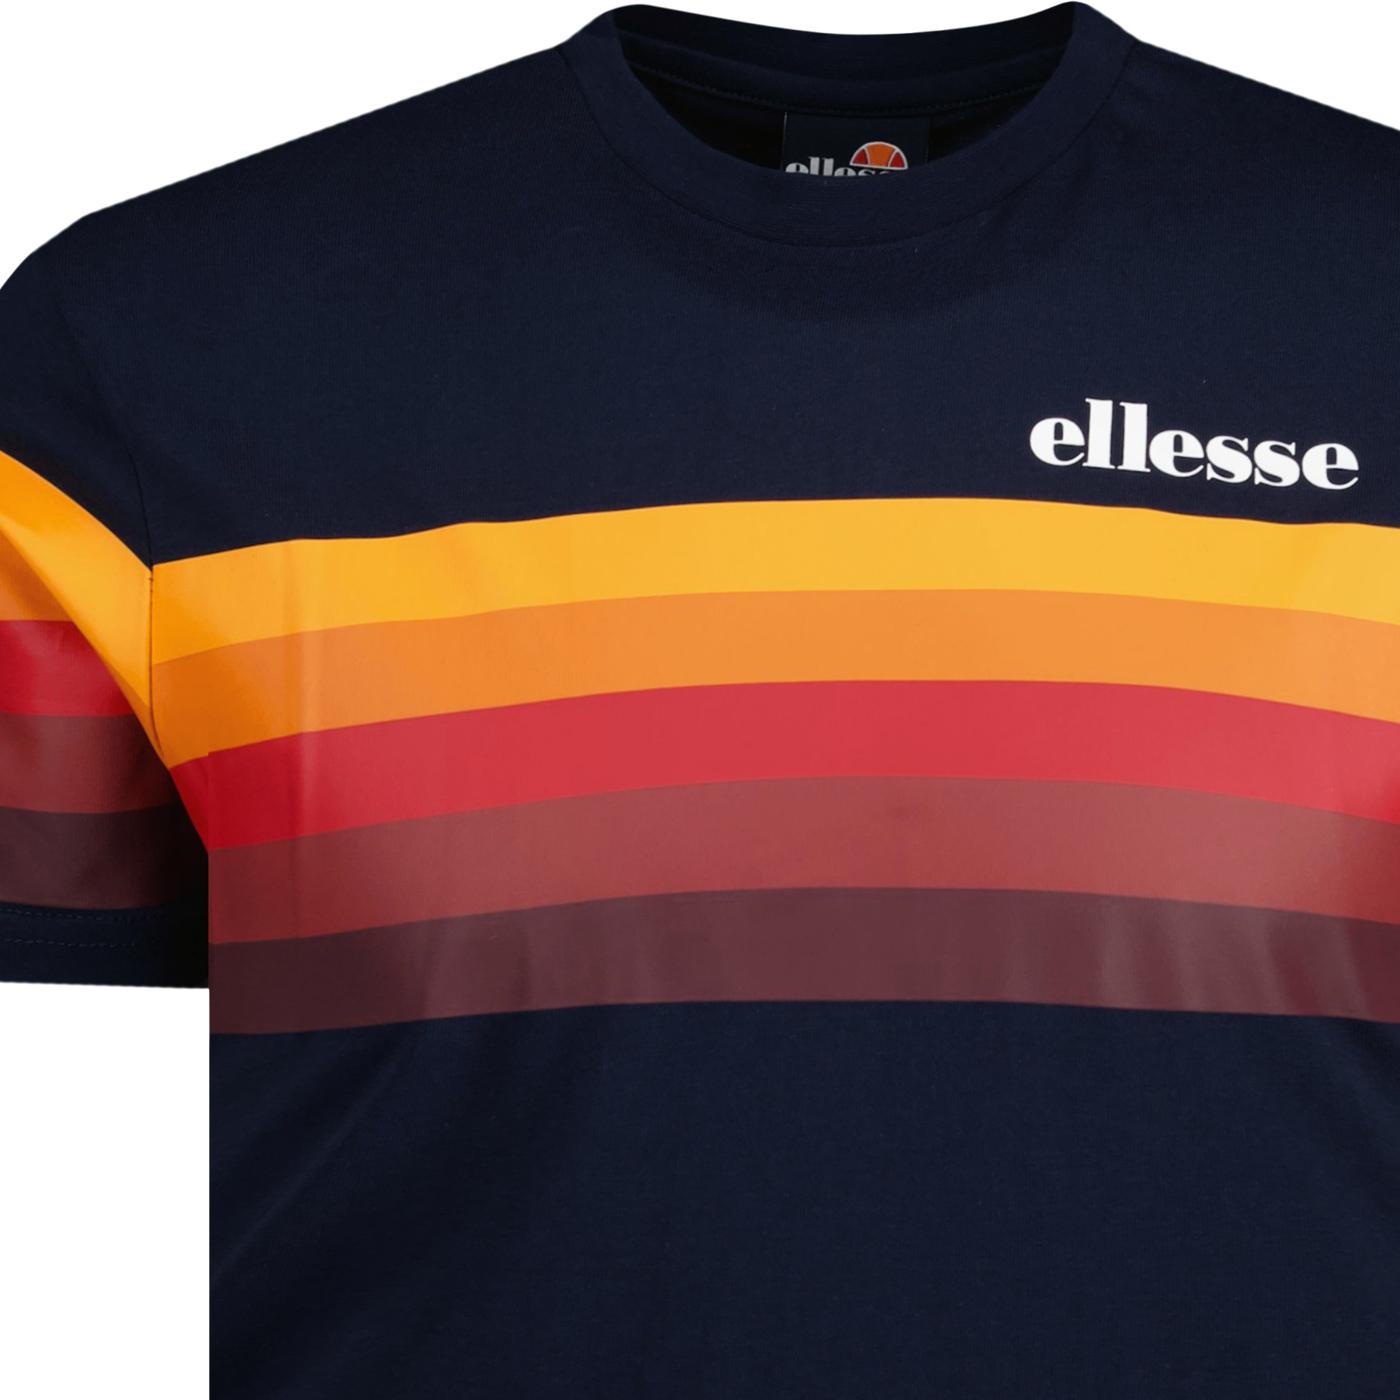 Paco ELLESSE Men\'s T-shirt Navy in Stripe 70s Gradient Retro